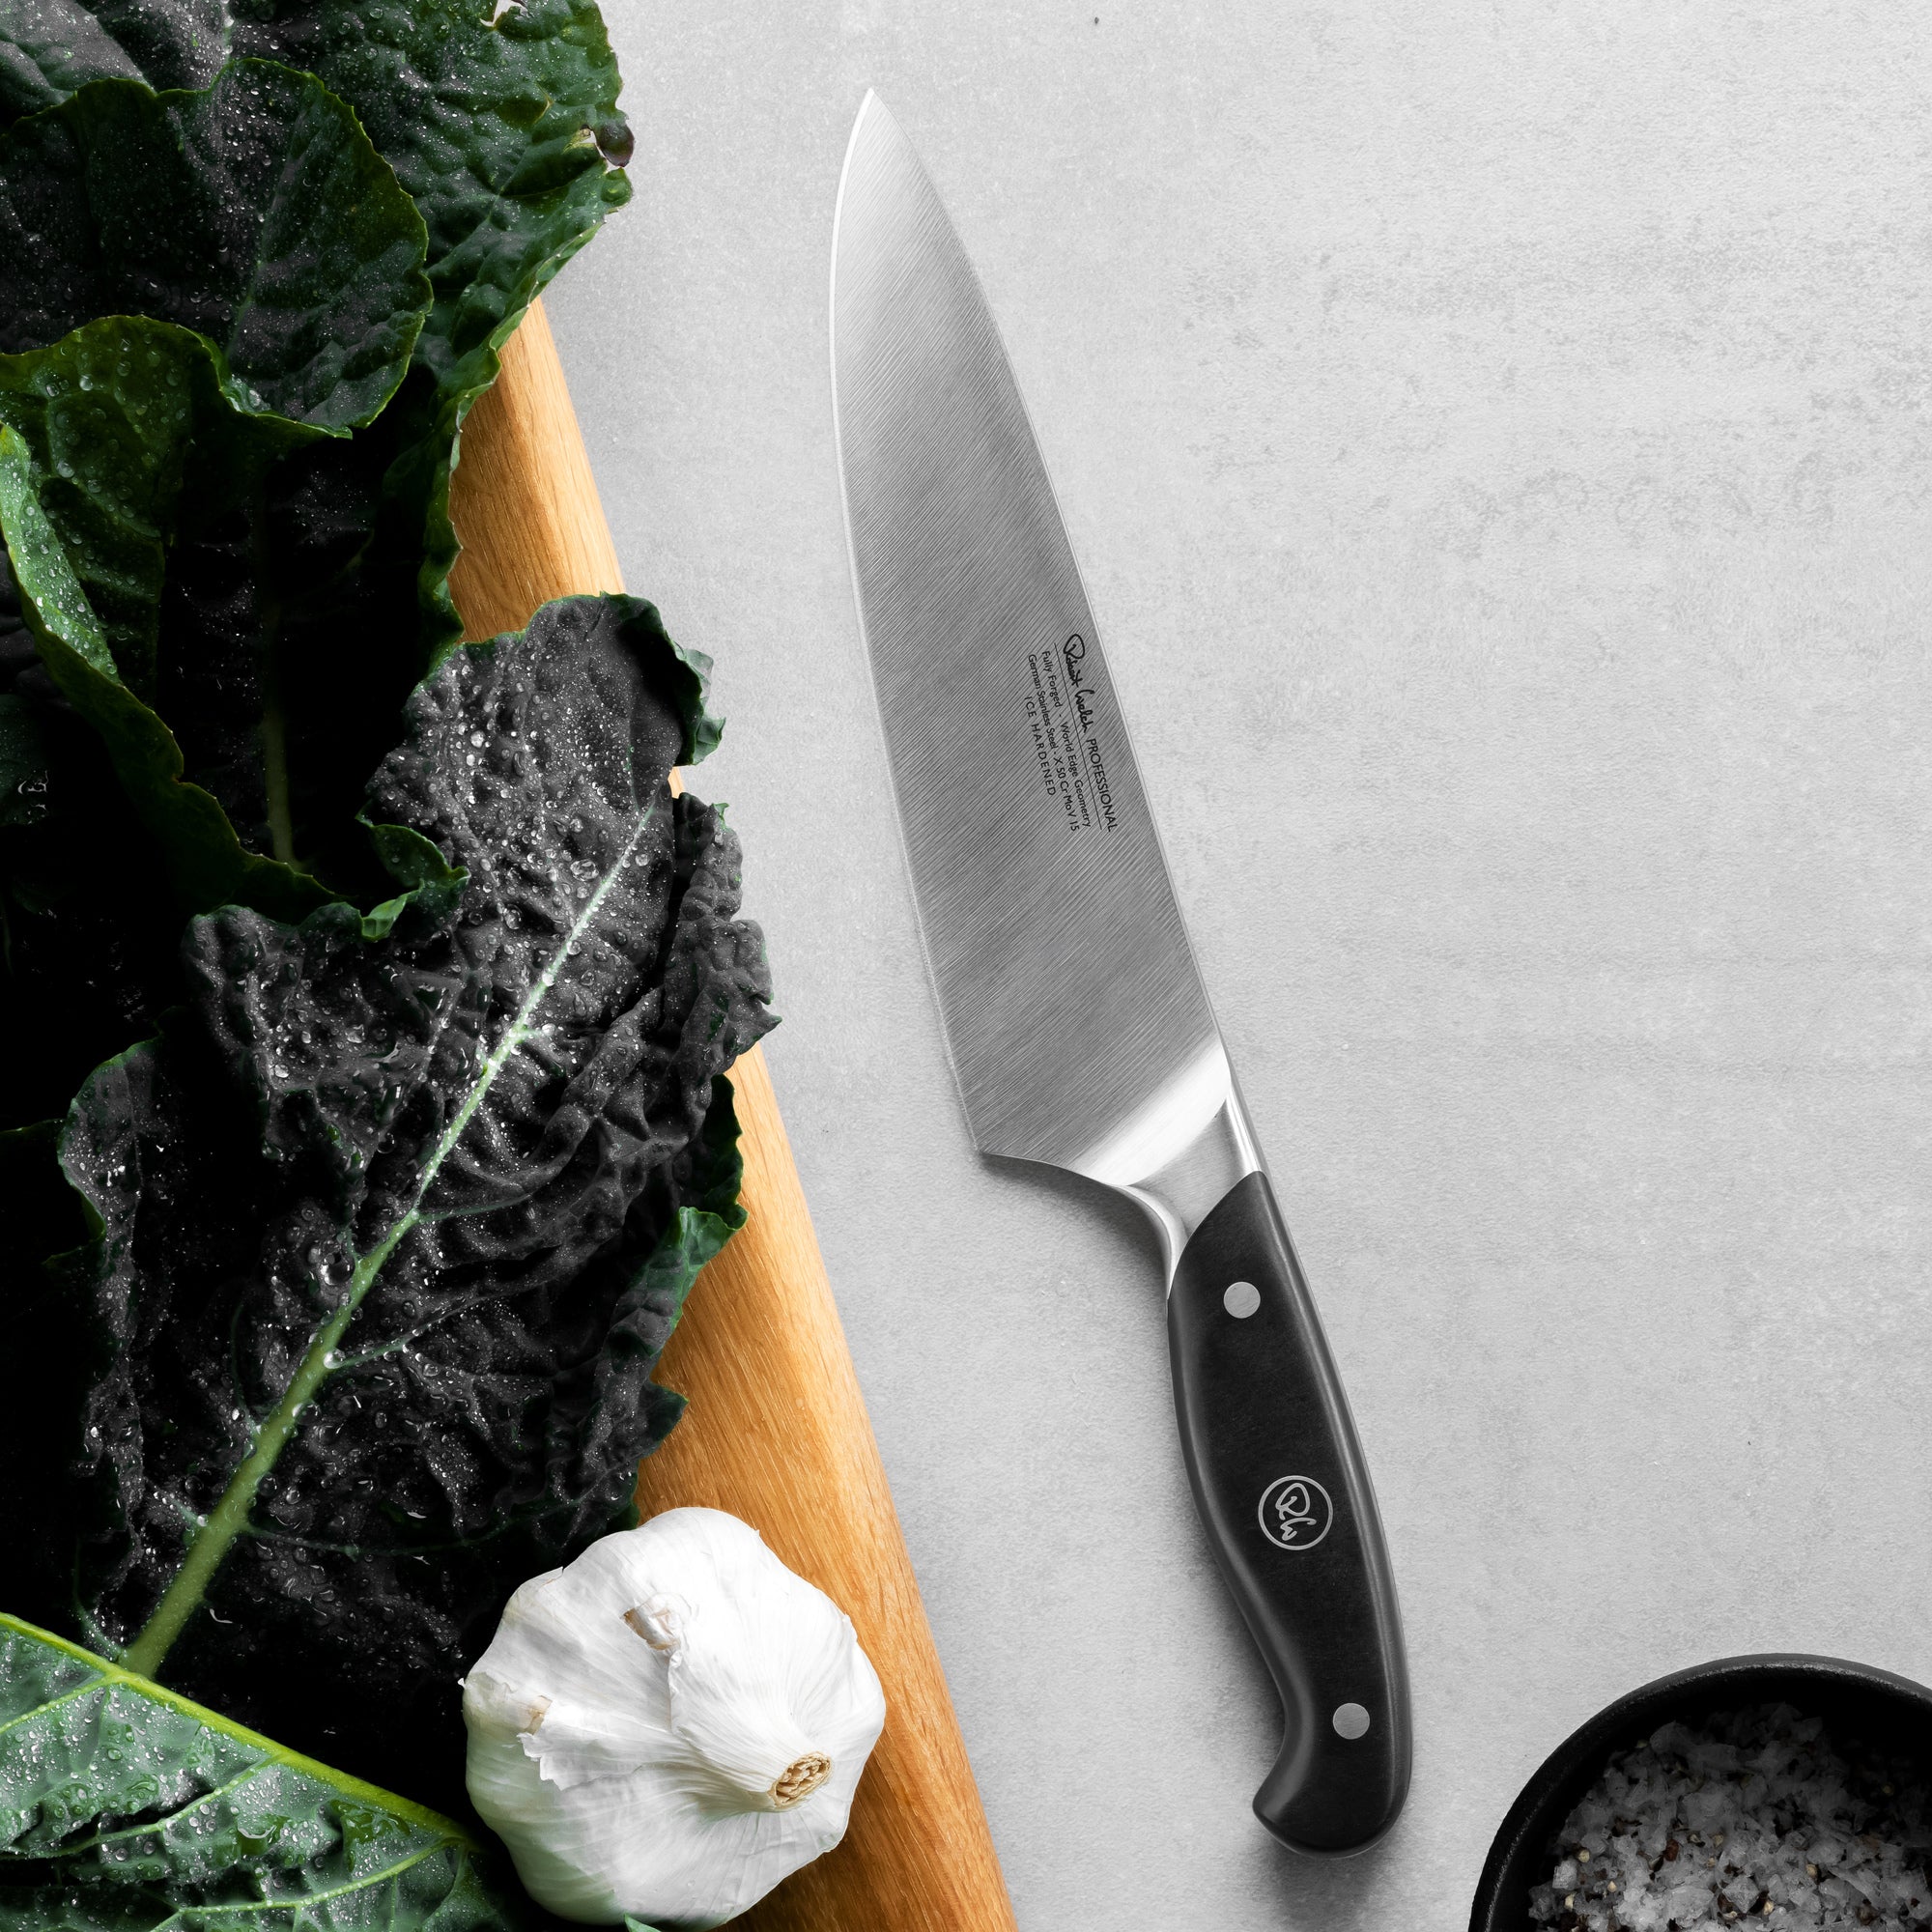 Robert Welch Professional V 18cm Chefs Knife